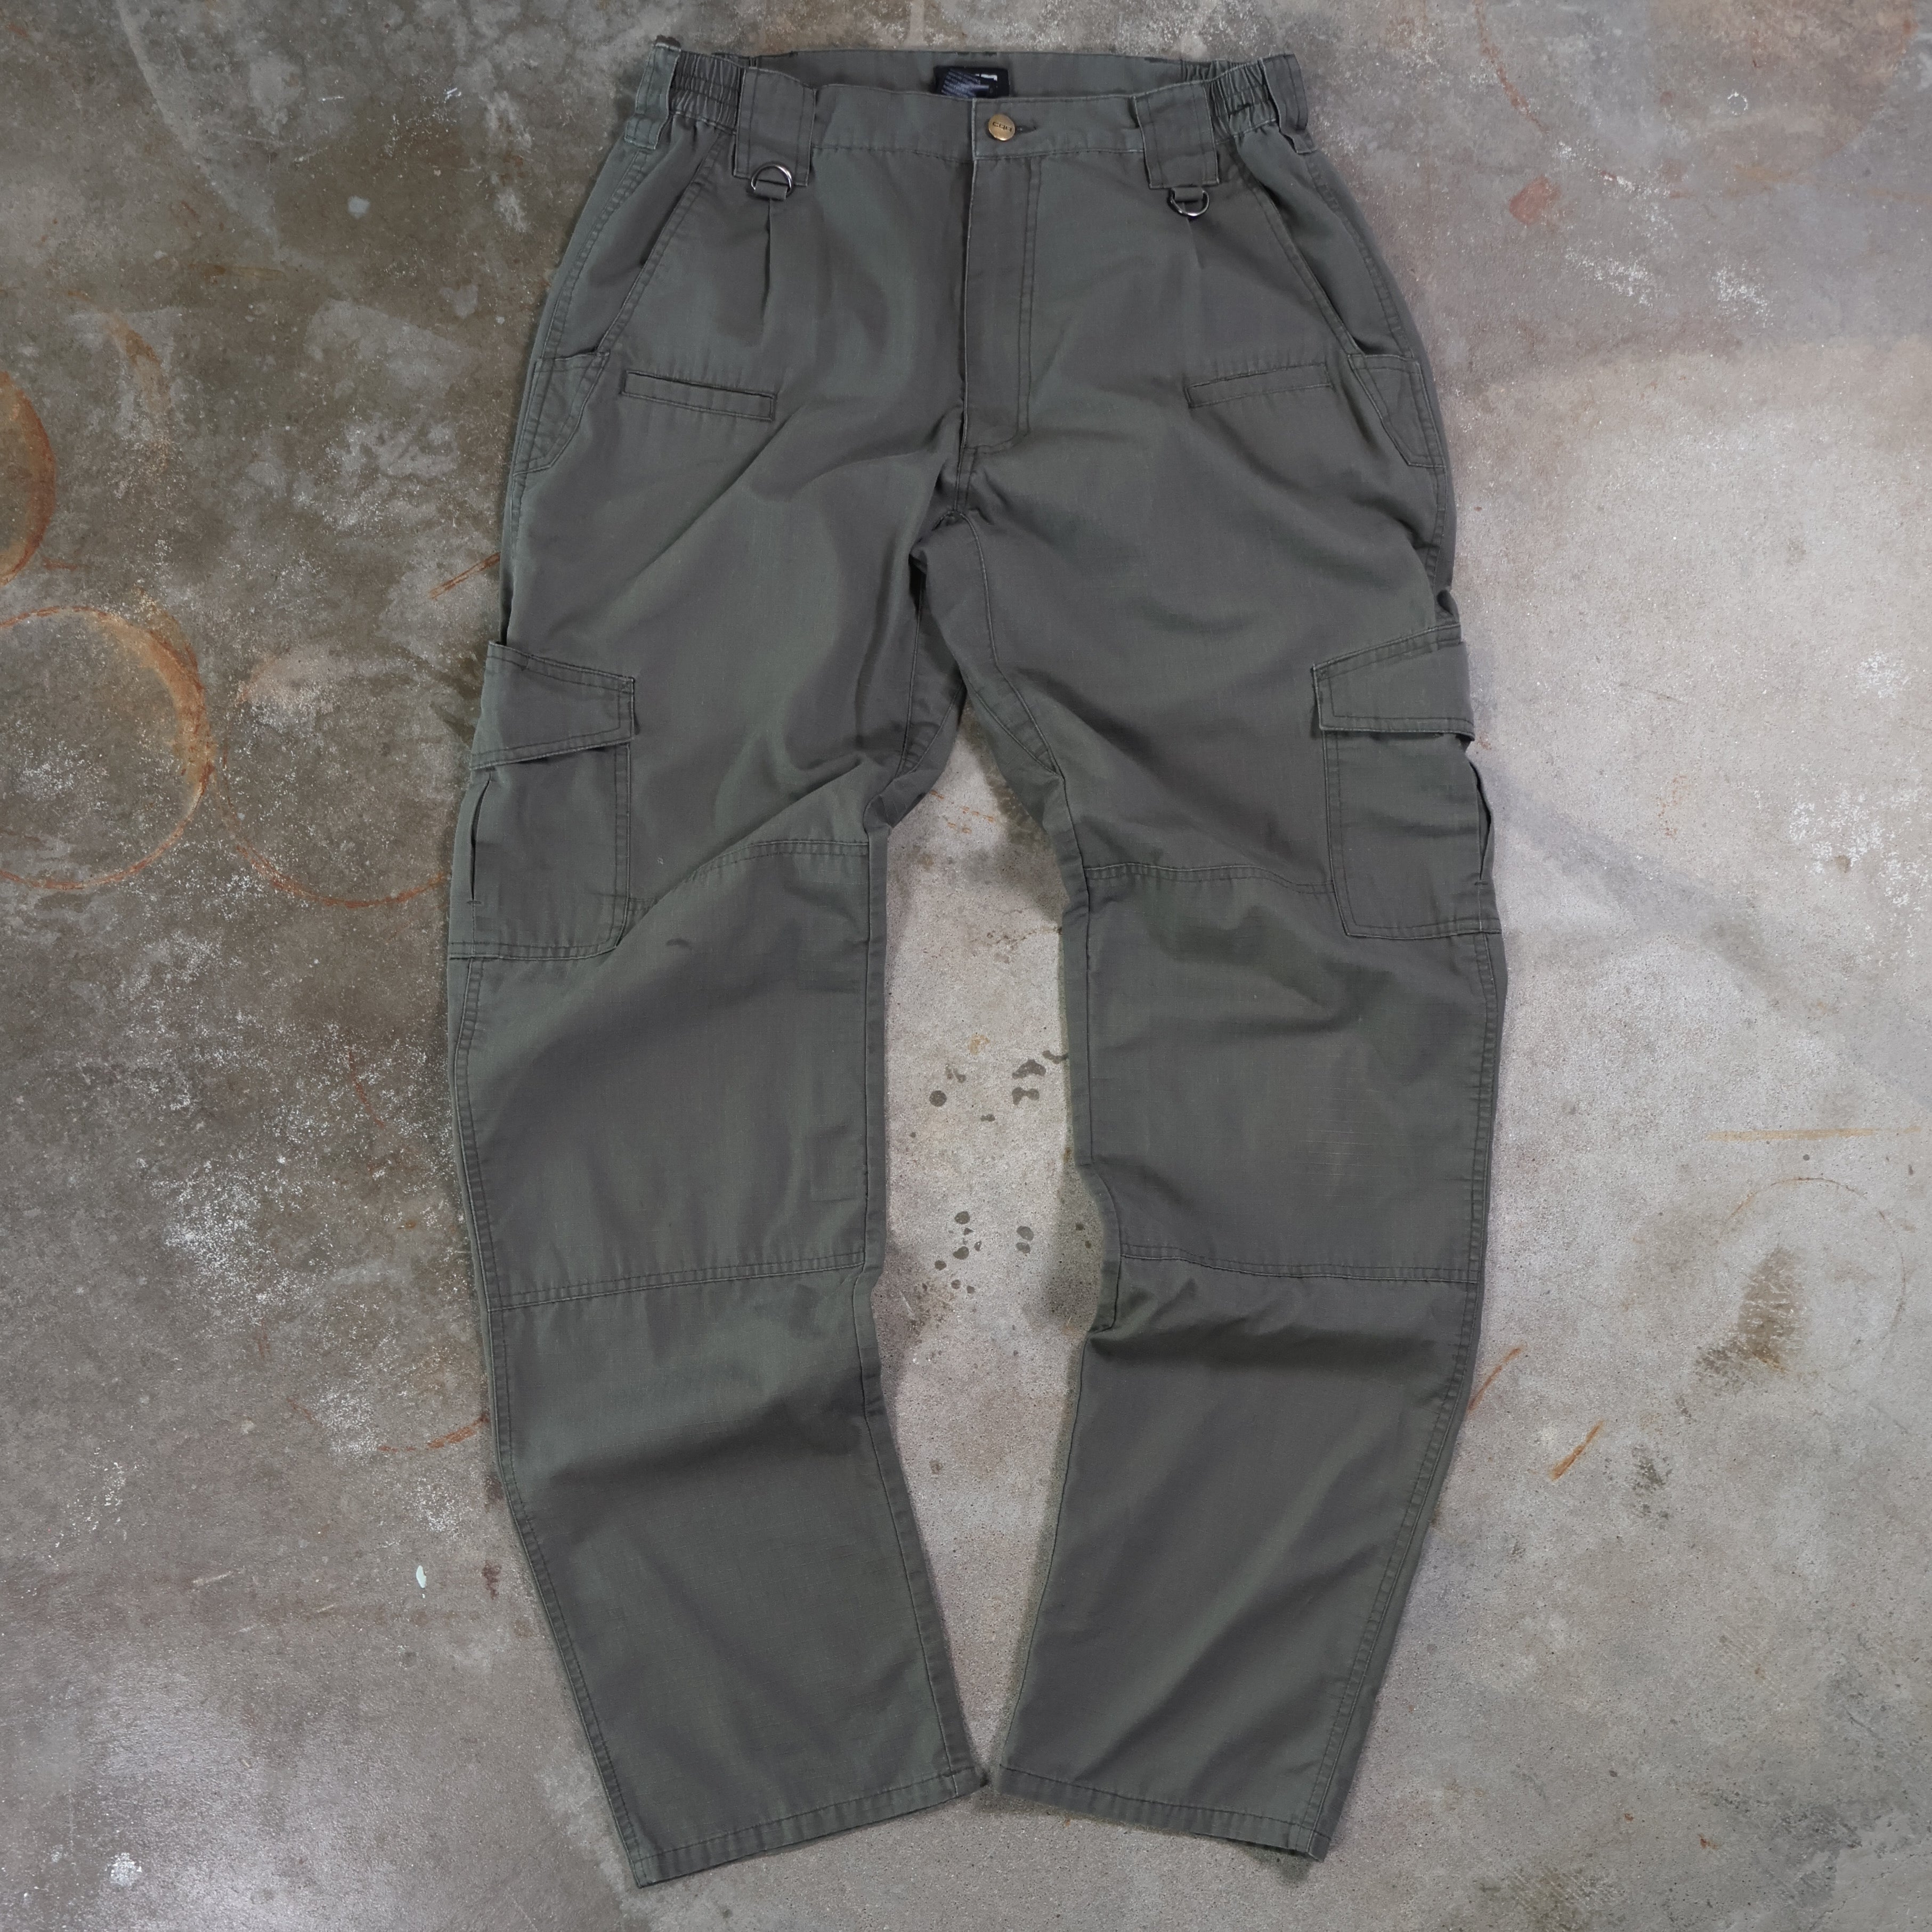 Green CQR Cargo Pants (32")